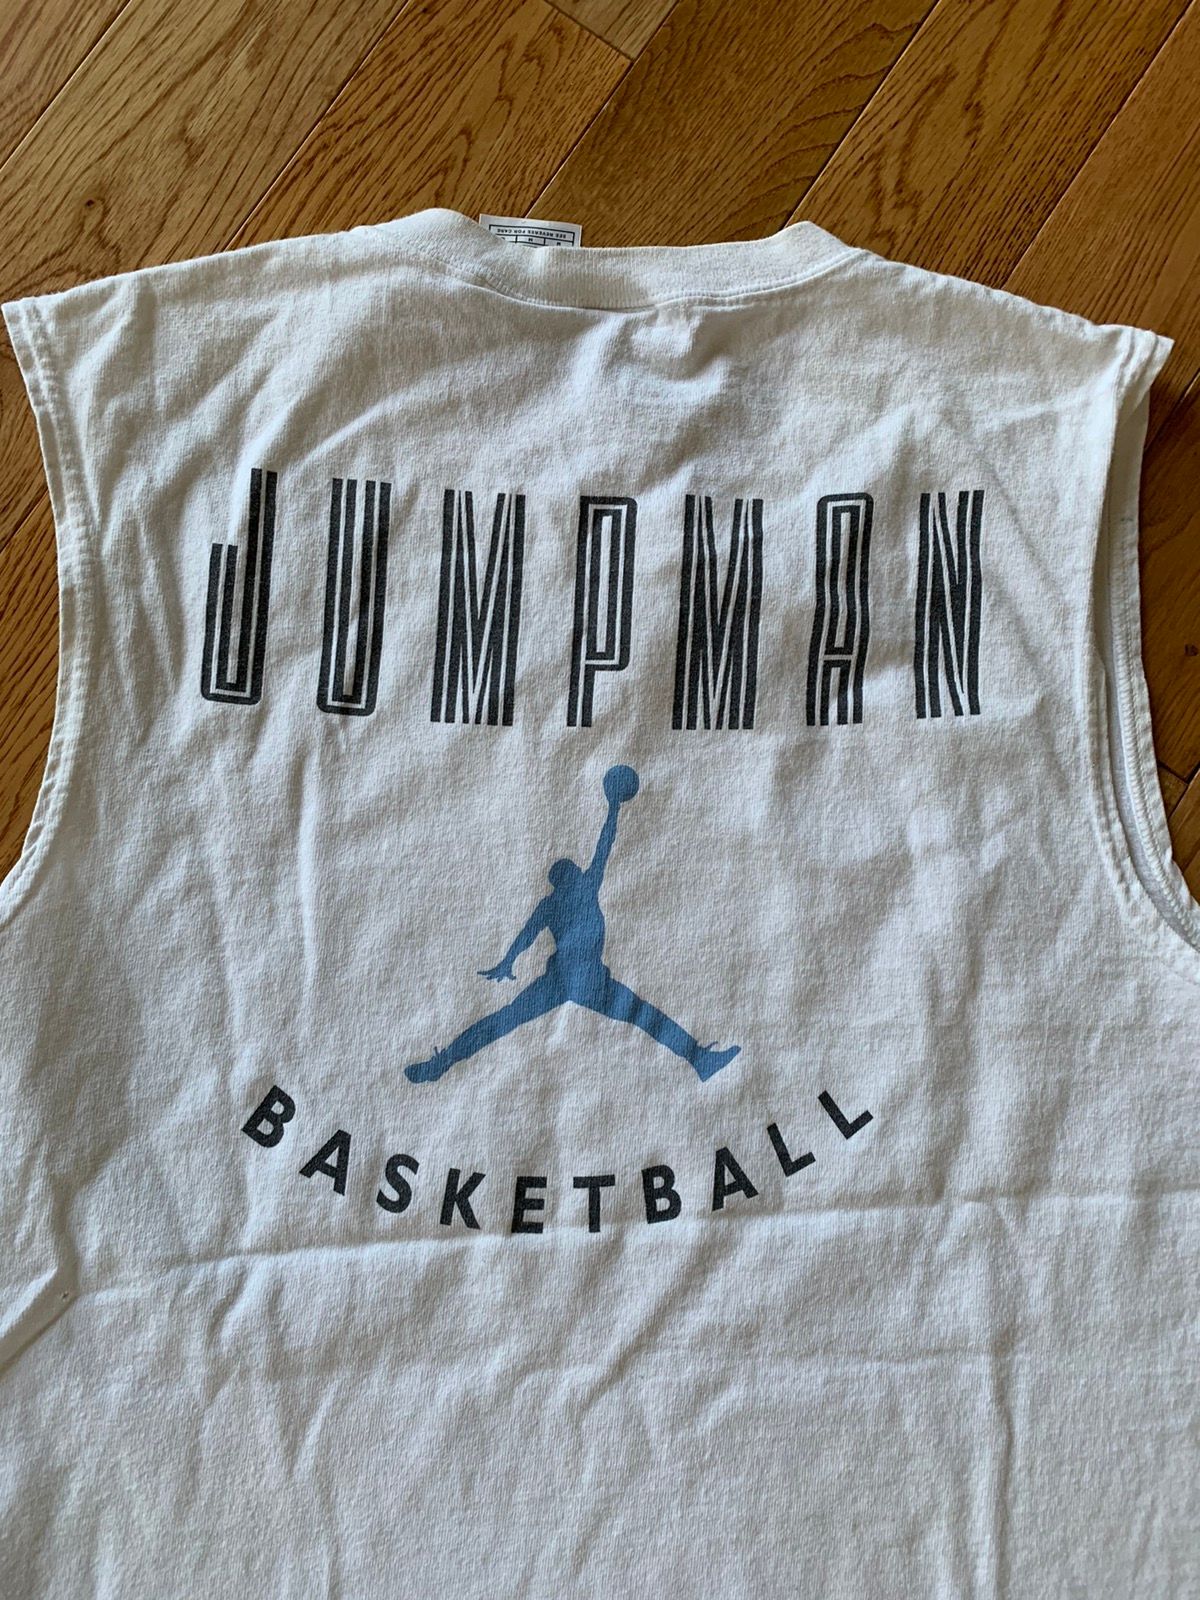 Nike Vintage Jordan jumpman nike sleeveless shirt Carolina Size US M / EU 48-50 / 2 - 5 Thumbnail